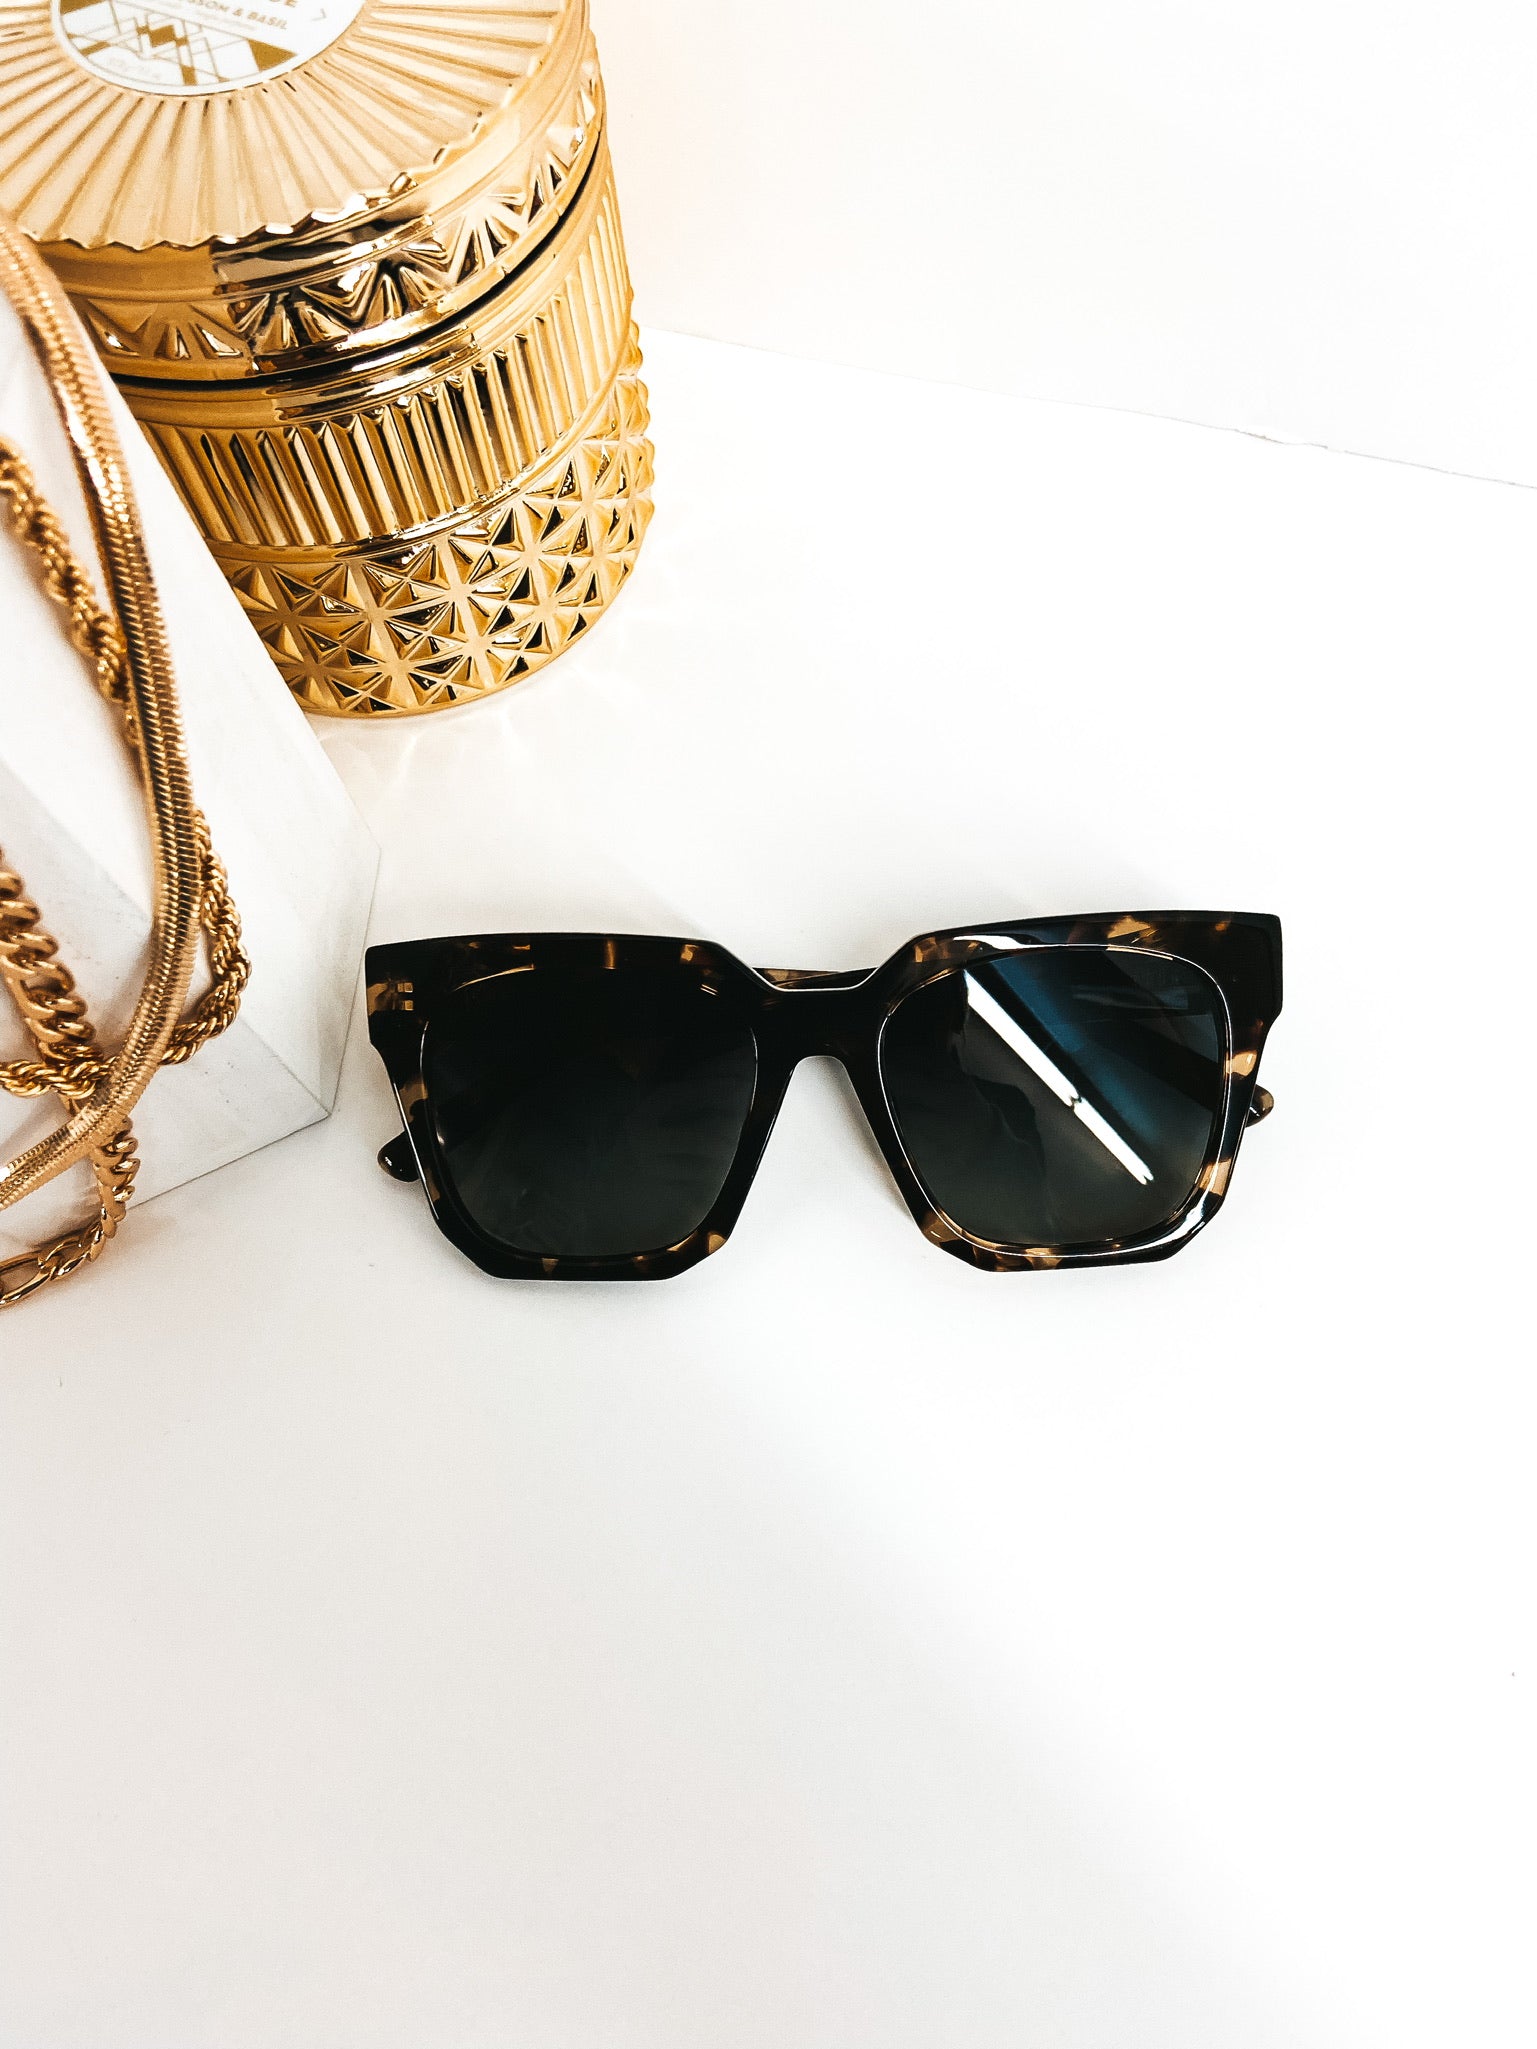 DIFF x Jessie James Decker | Jessie Polarized Grey Gradient Sunglasses in Espresso Tortoise - Giddy Up Glamour Boutique